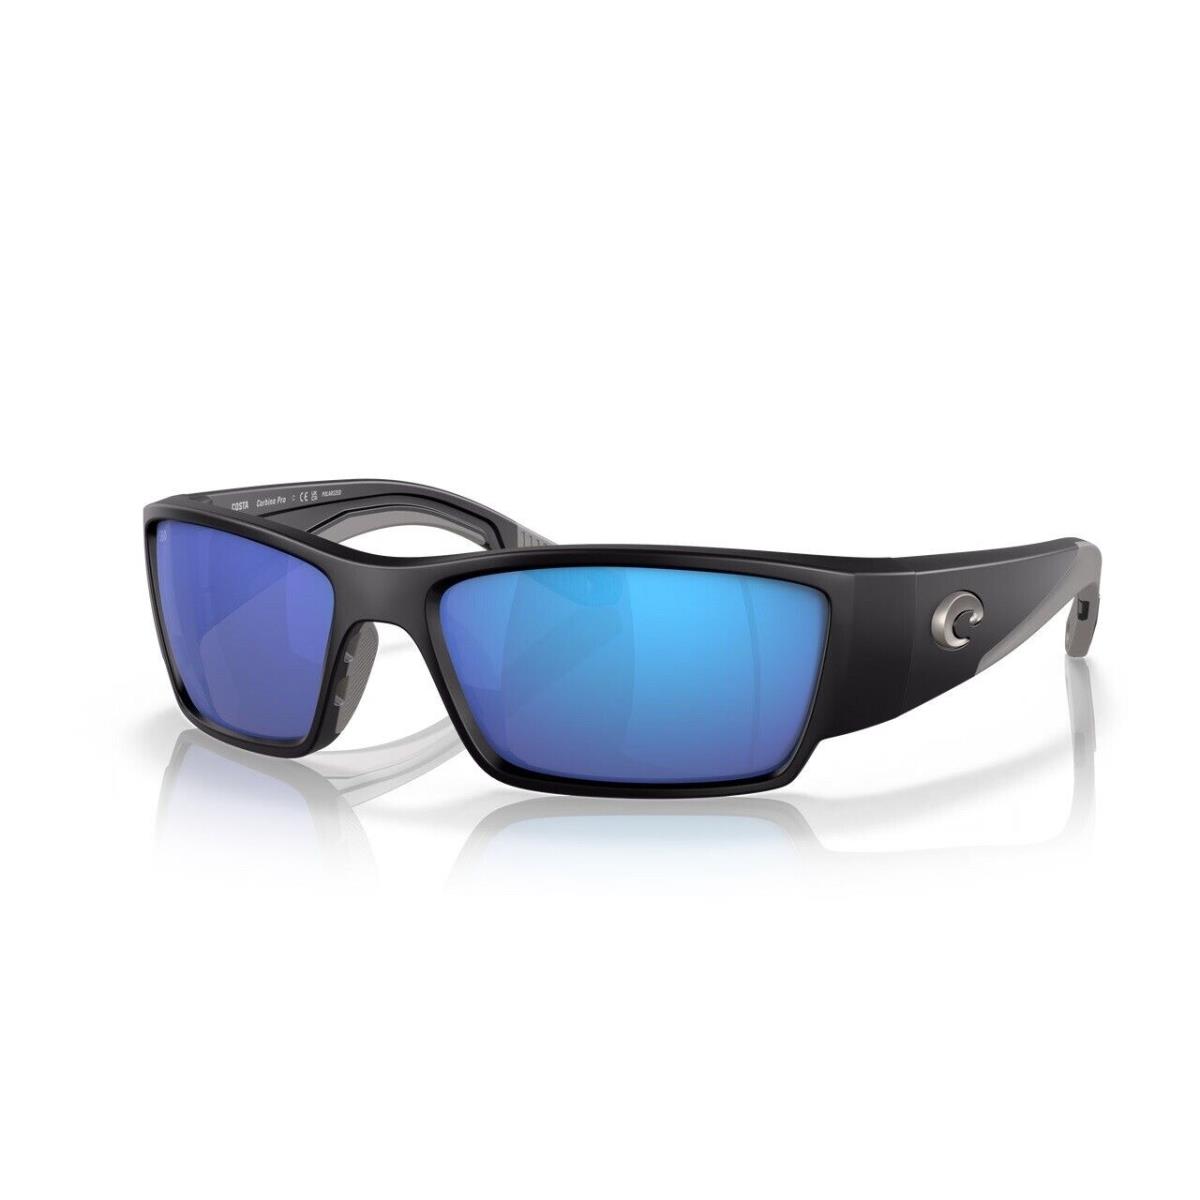 Costa Del Mar Corbina Pro Sunglasses Matte Black Frame w/ Blue Mirror Glass Lens - Frame: Black, Lens: Blue